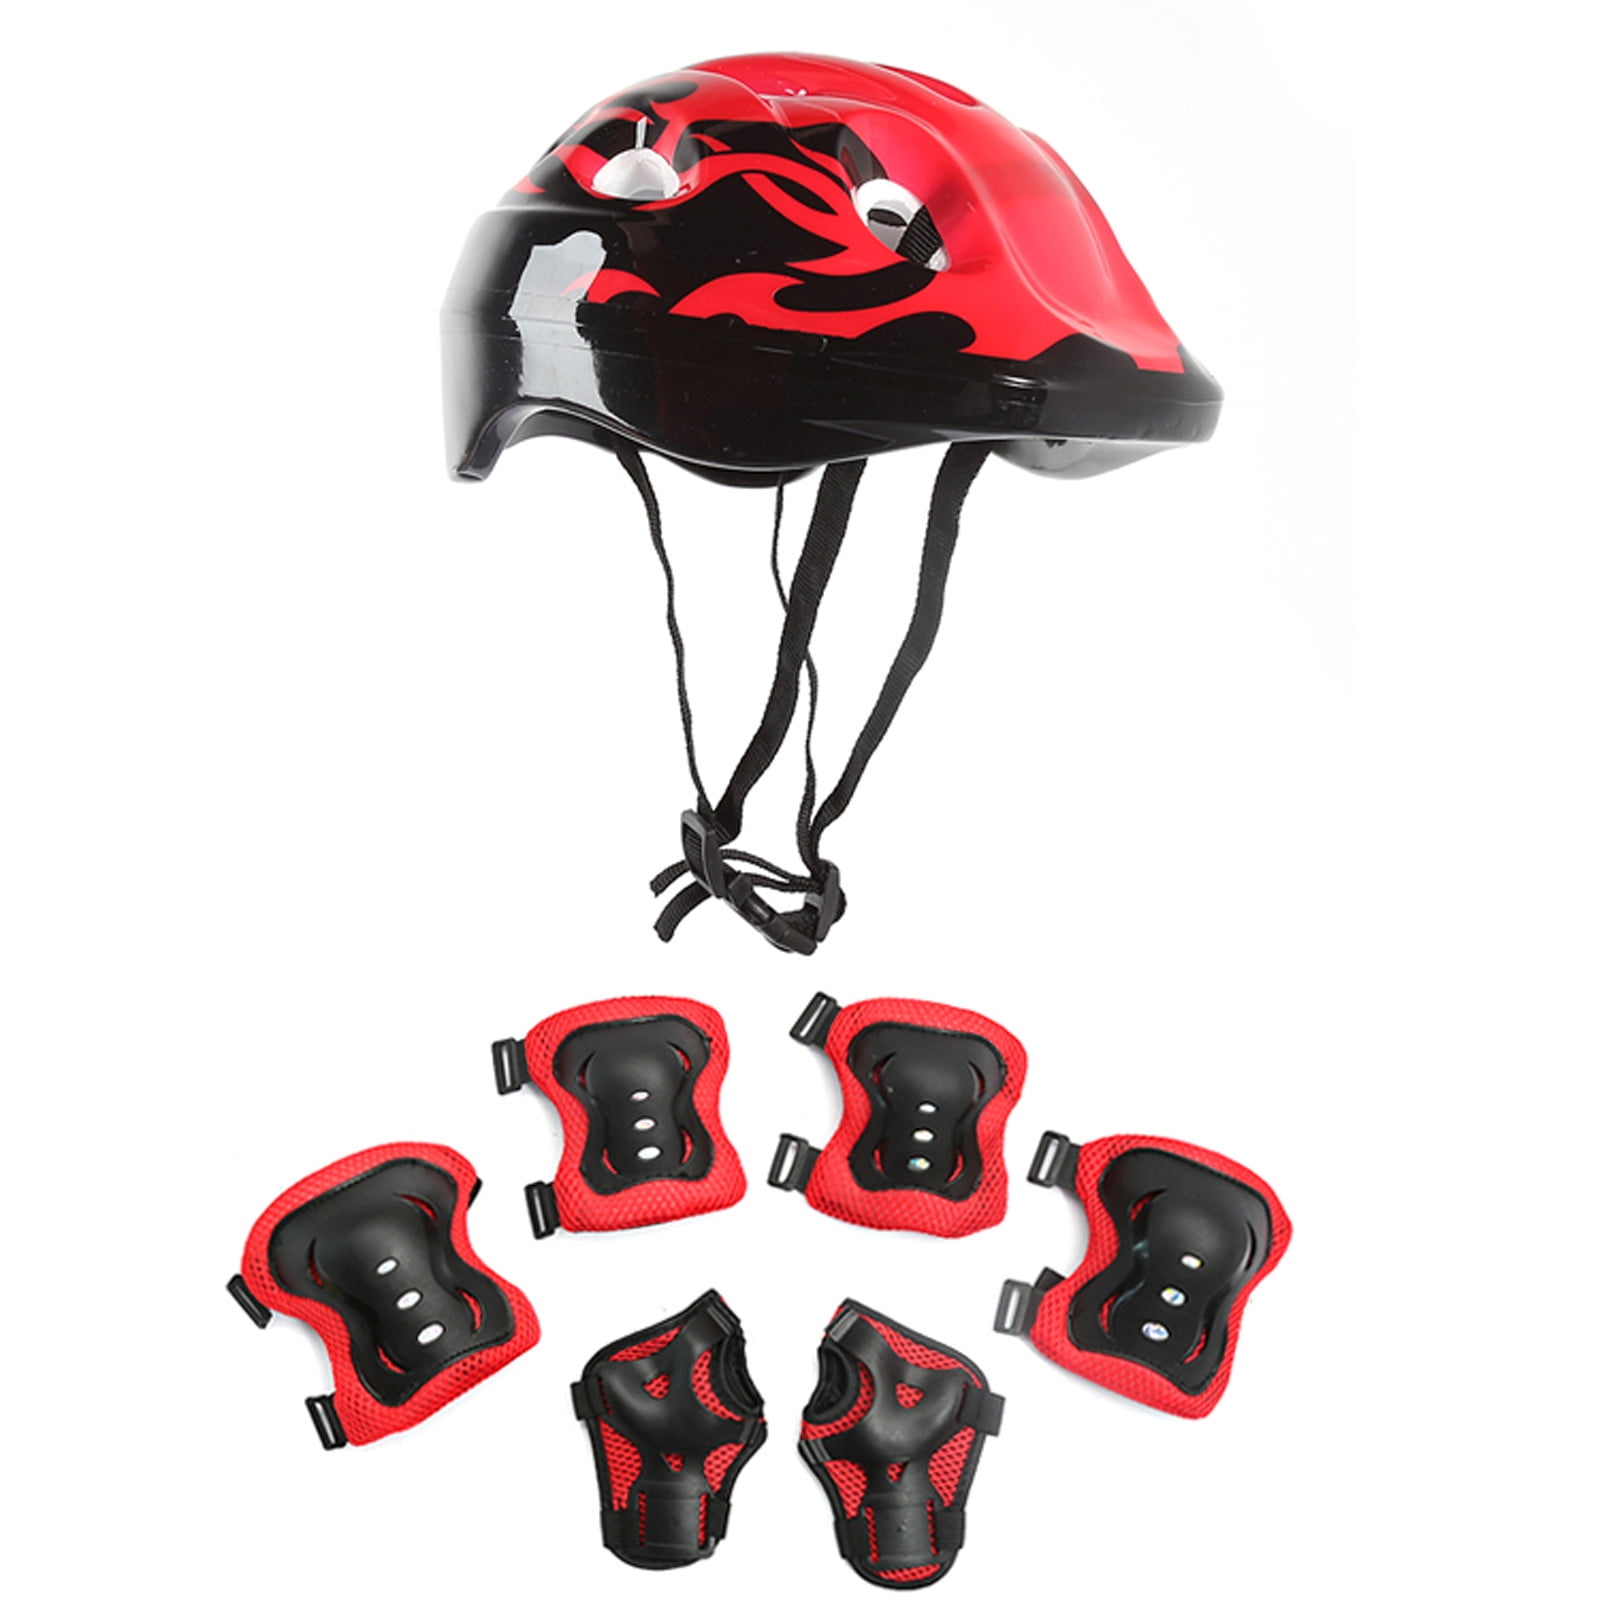 7pcs Kids Protector Swegway Gear Safety Helmet Children Knee Elbow Pad Kit 